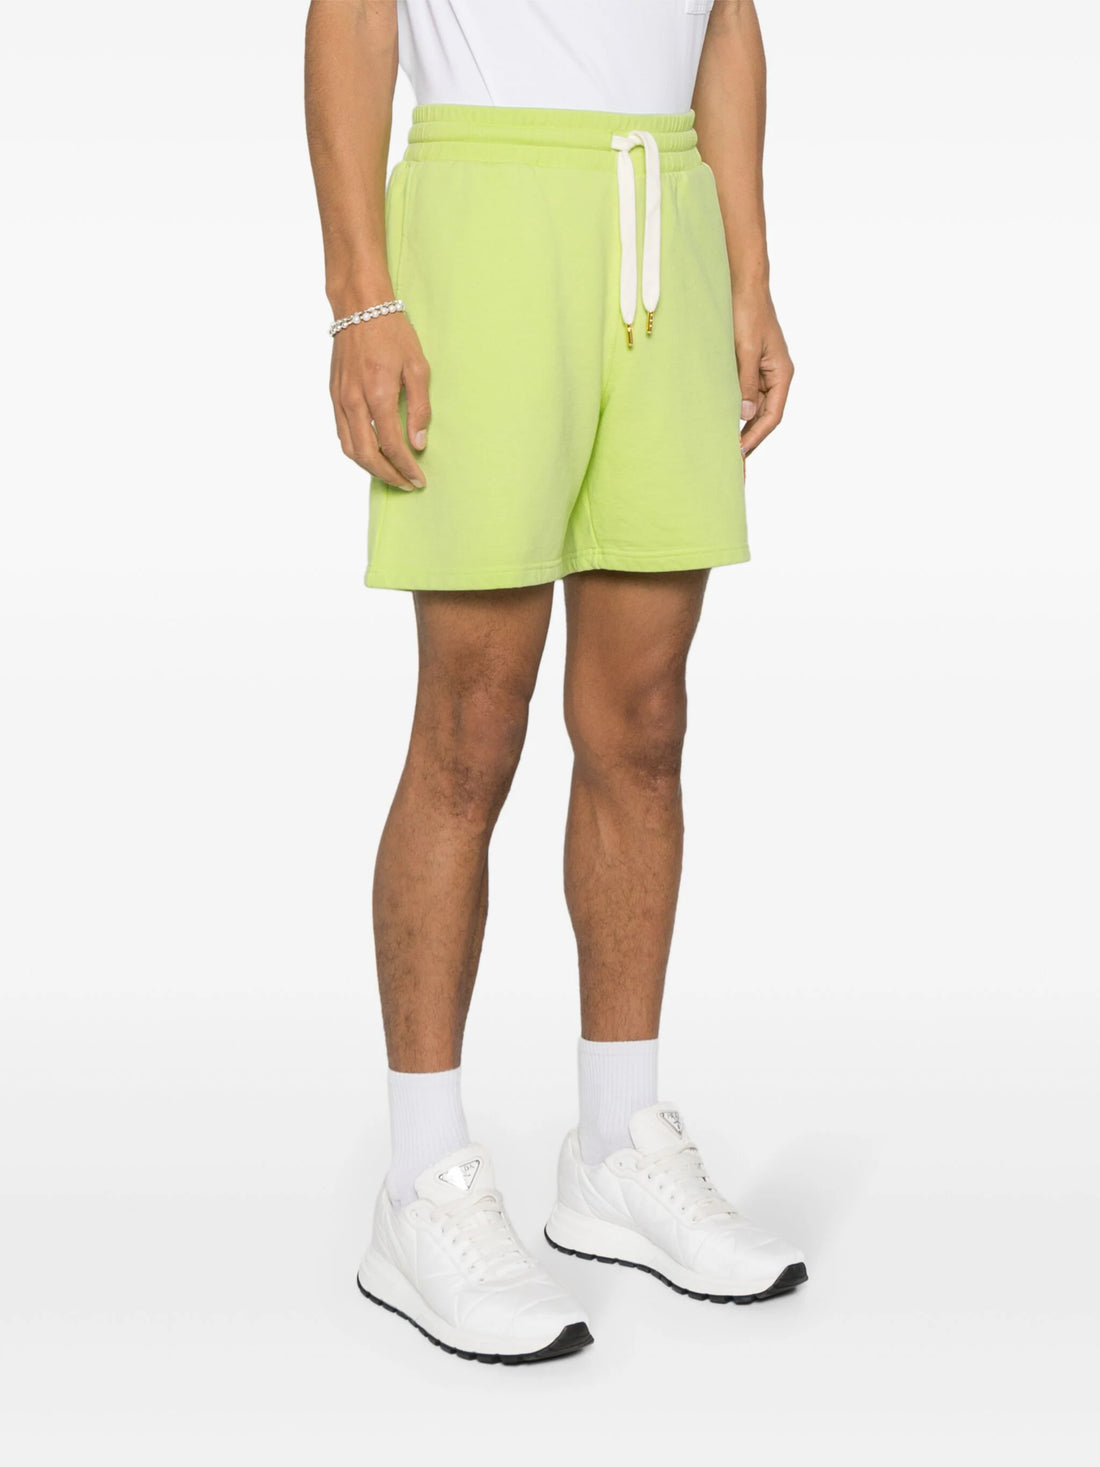 CASABLANCA MEN Afro Cubism Tennis Club Embroidered Sweat Shorts Pale Green - MAISONDEFASHION.COM